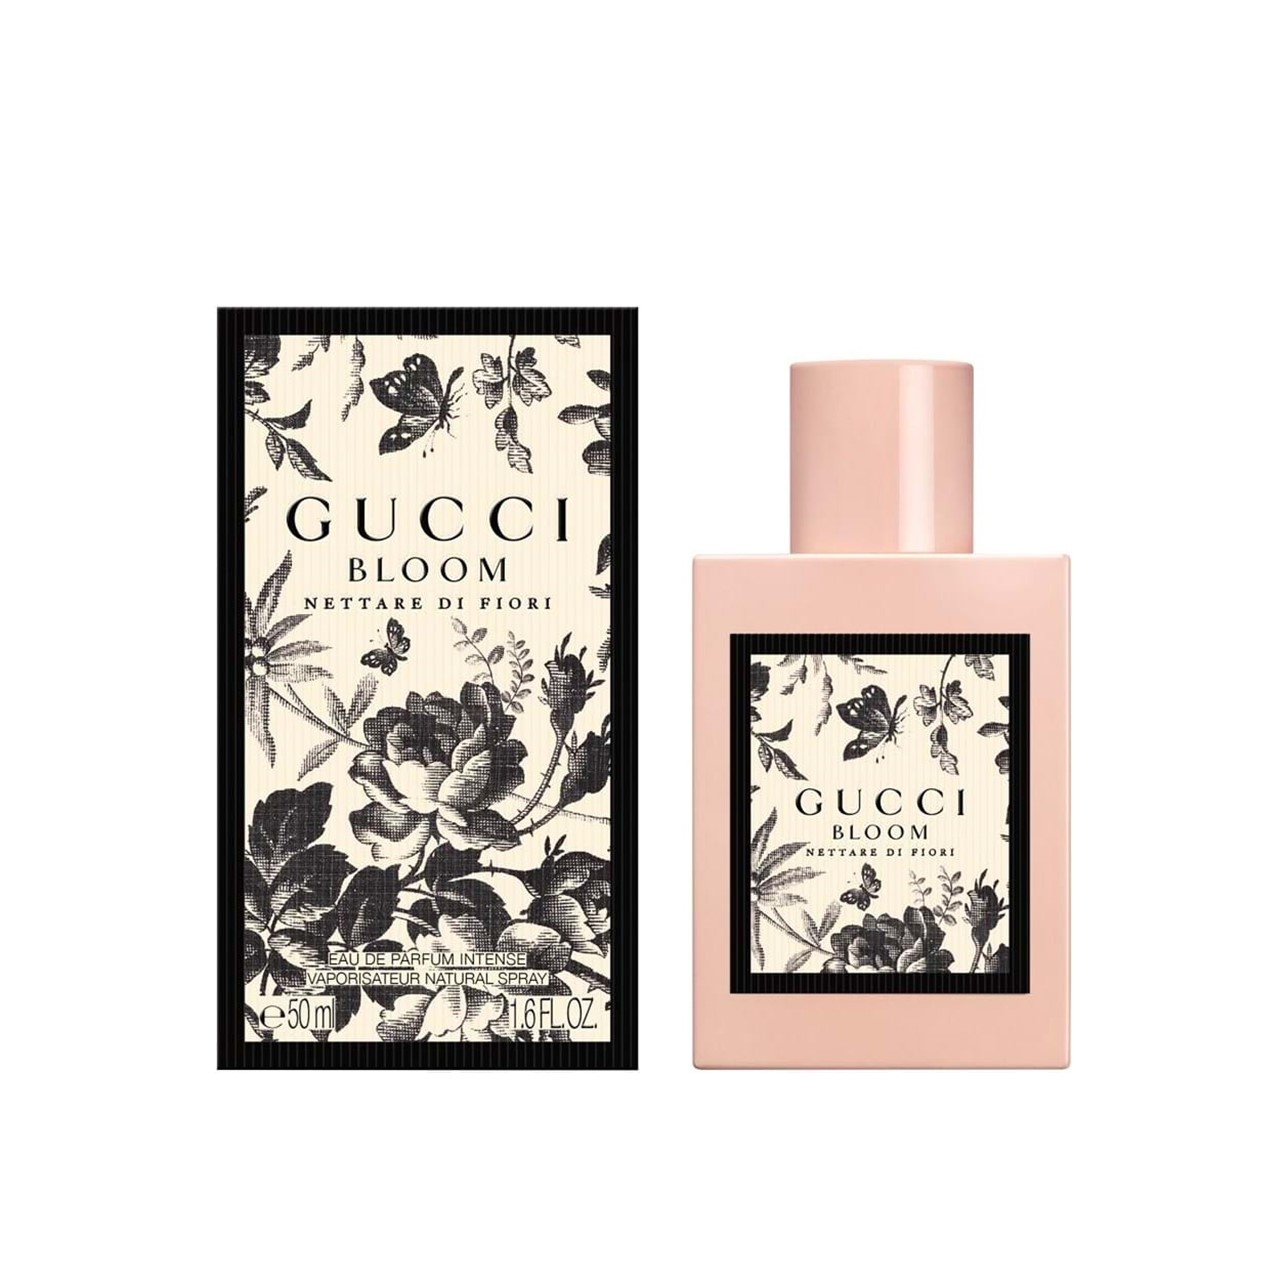 Buy Gucci Bloom Nettare Di Fiori Eau de Parfum Intense 50ml · India